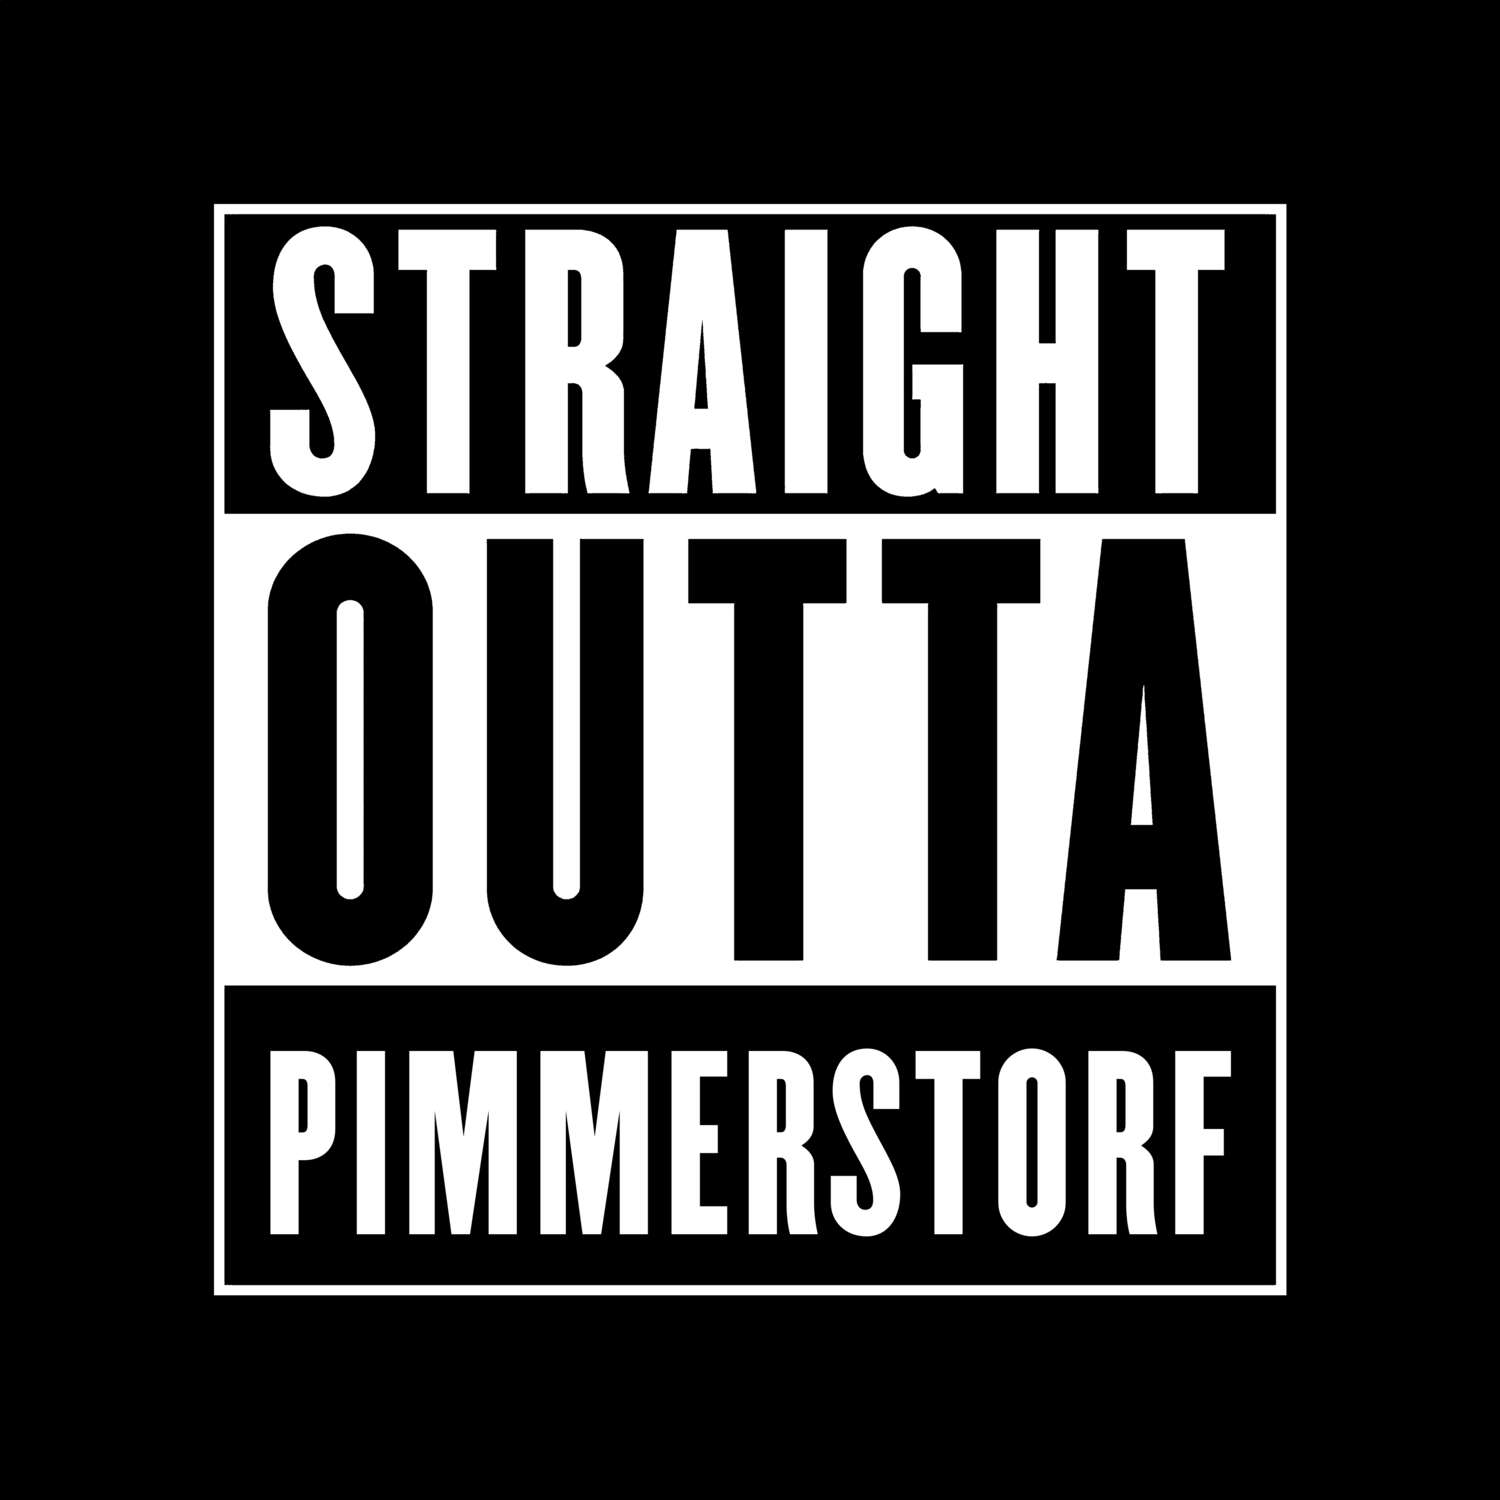 Pimmerstorf T-Shirt »Straight Outta«